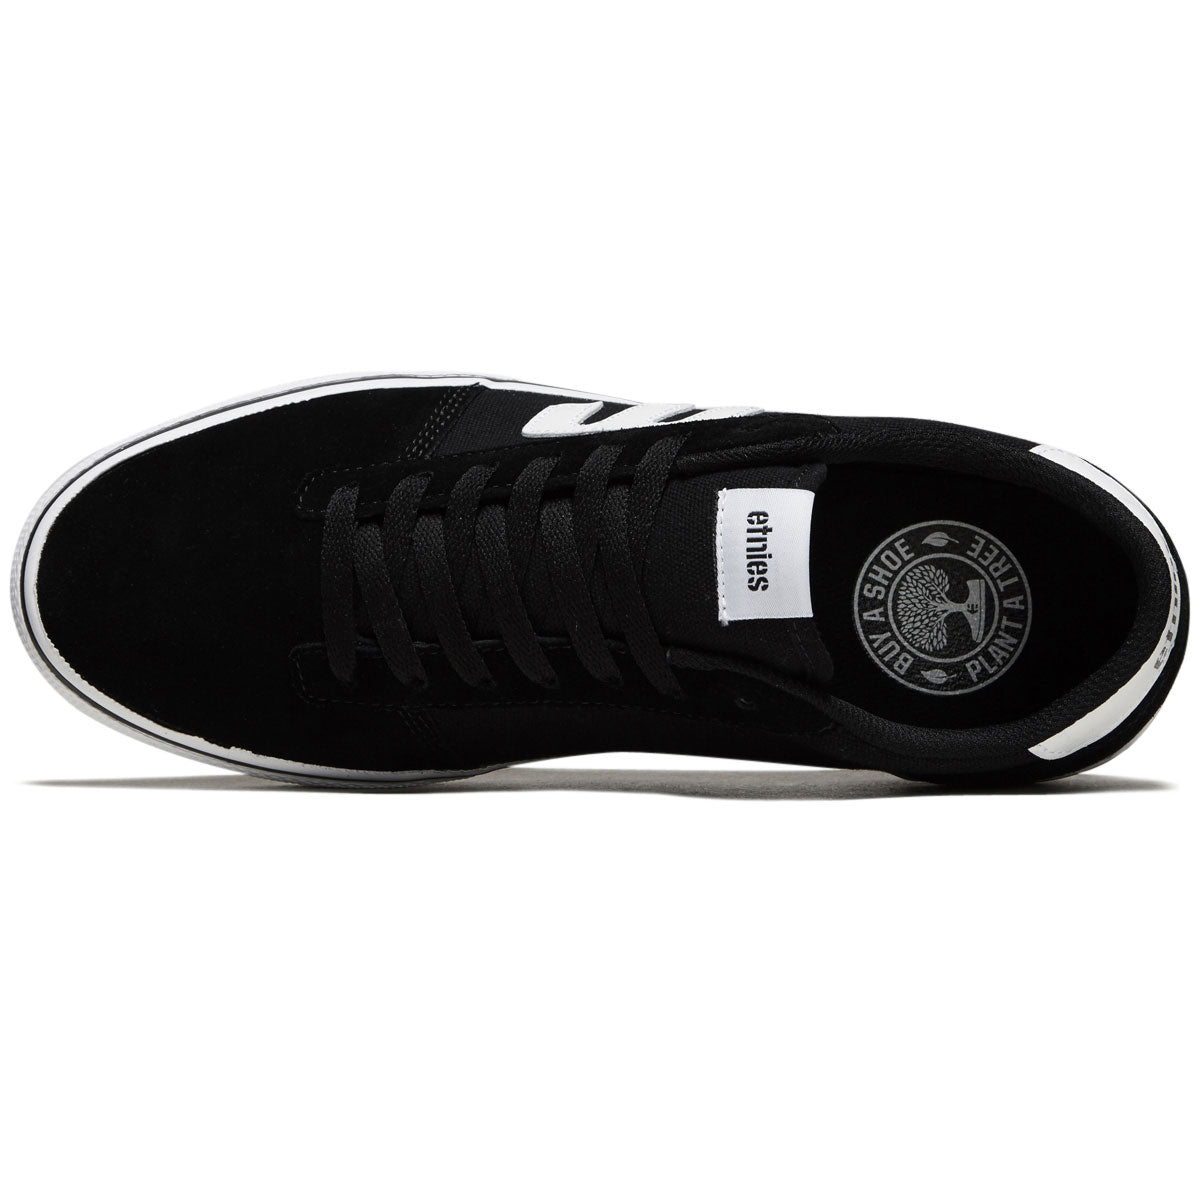 Etnies Calli Vulc Shoes - Black/White image 3